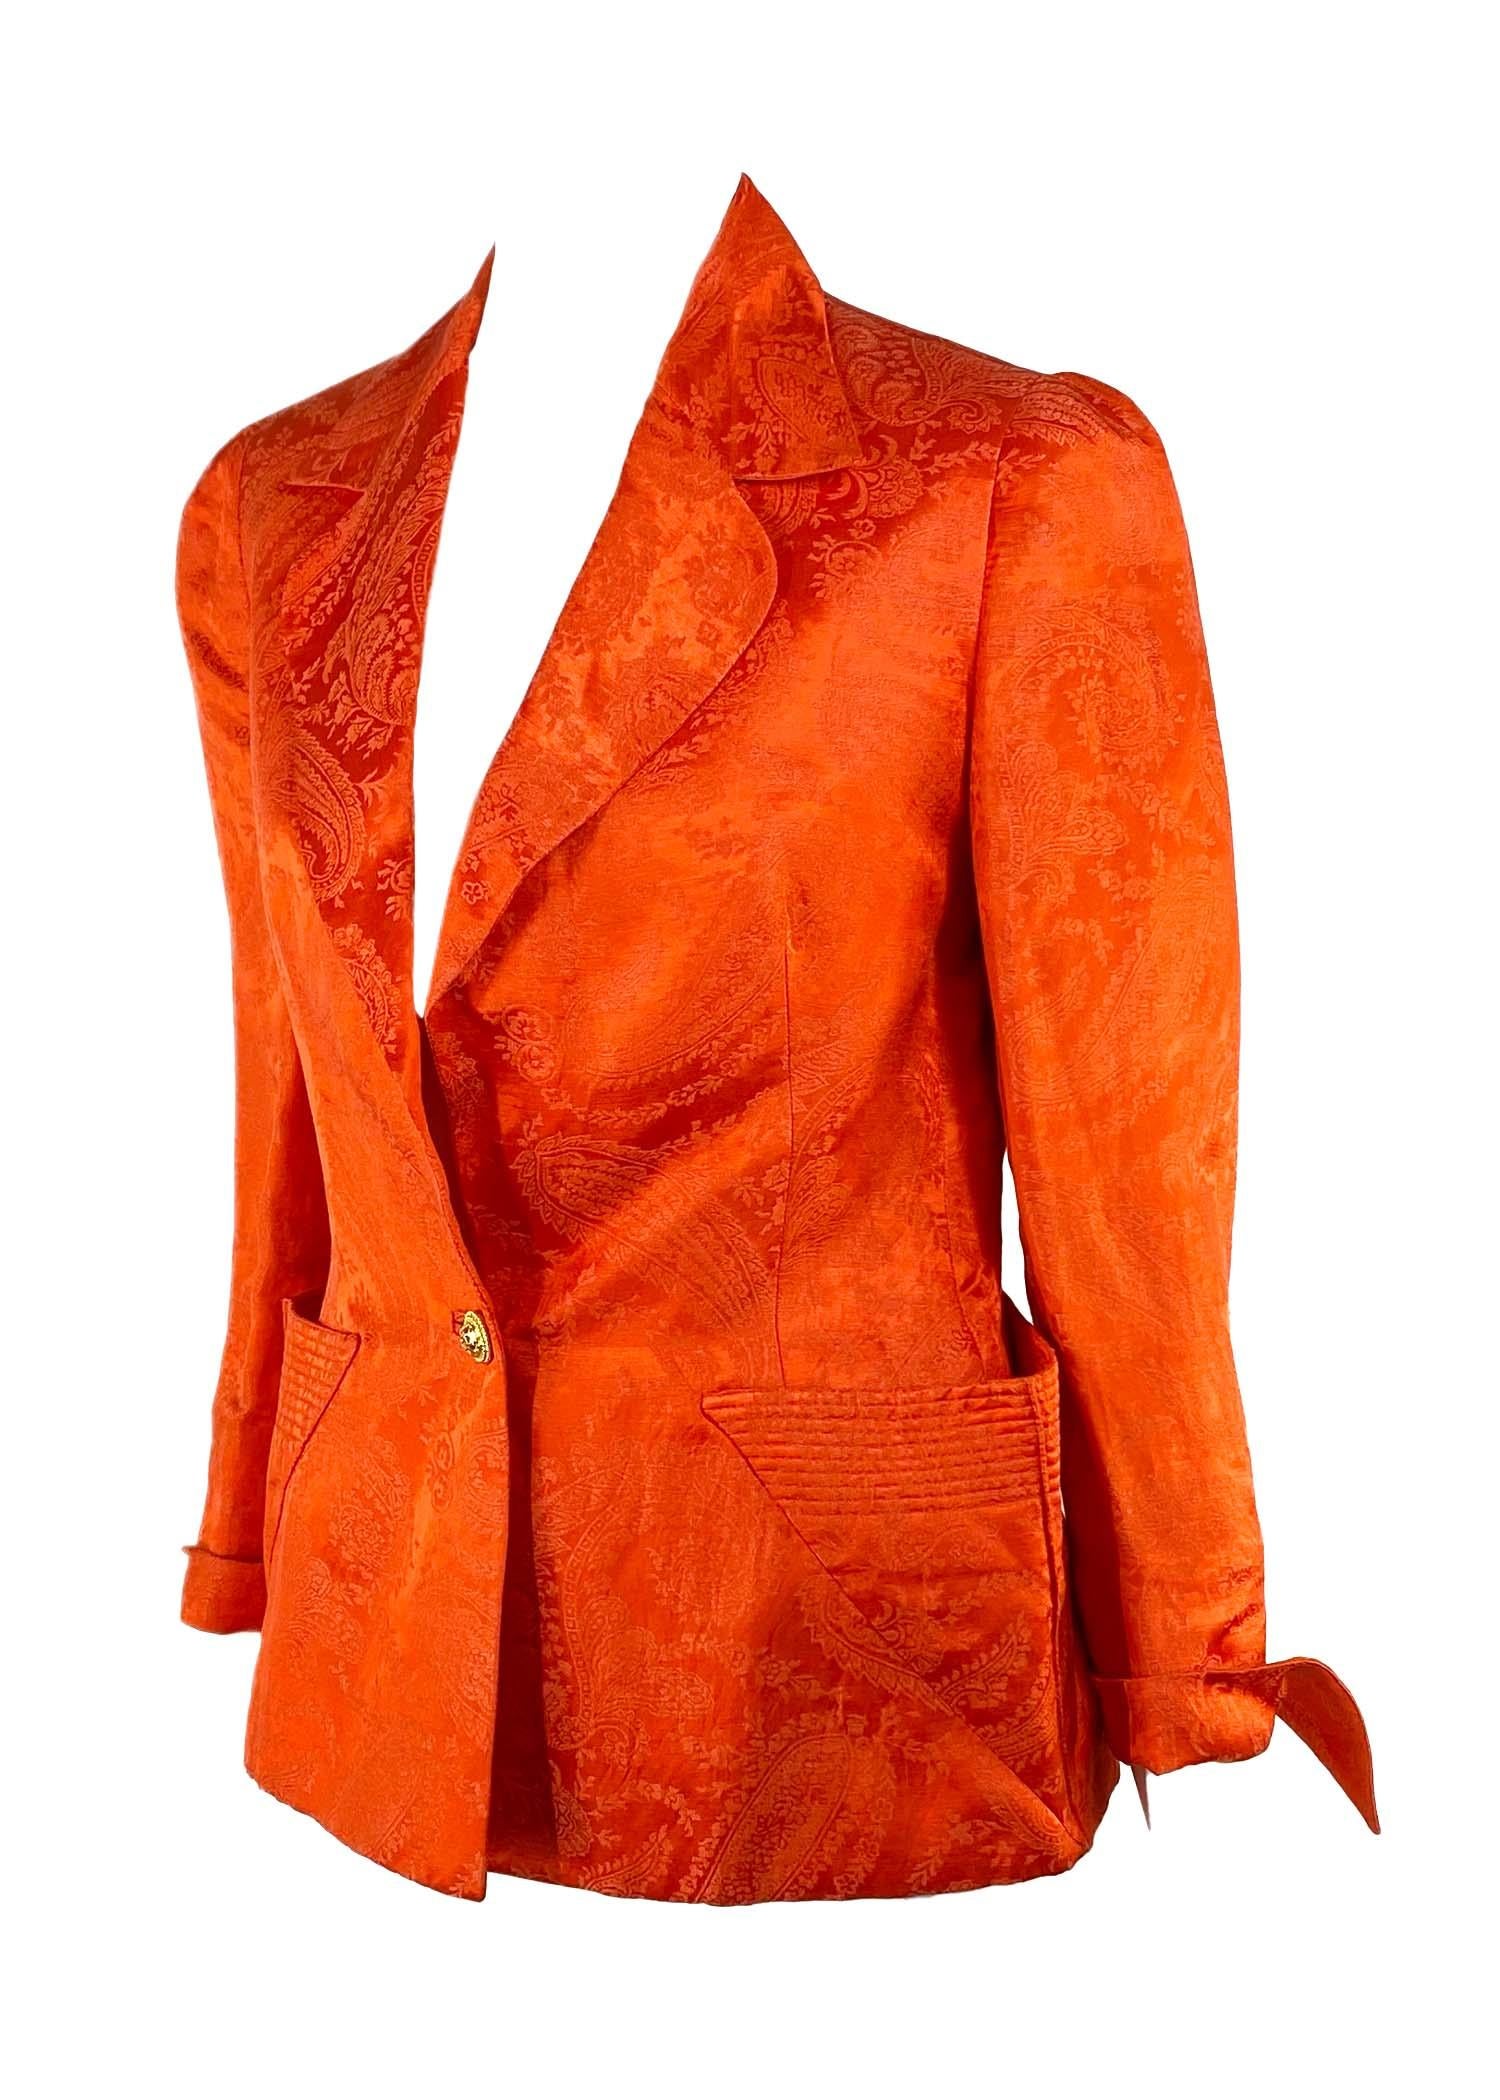 Women's S/S 1991 Gianni Versace Couture Runway Orange Silk Paisley Print Blazer